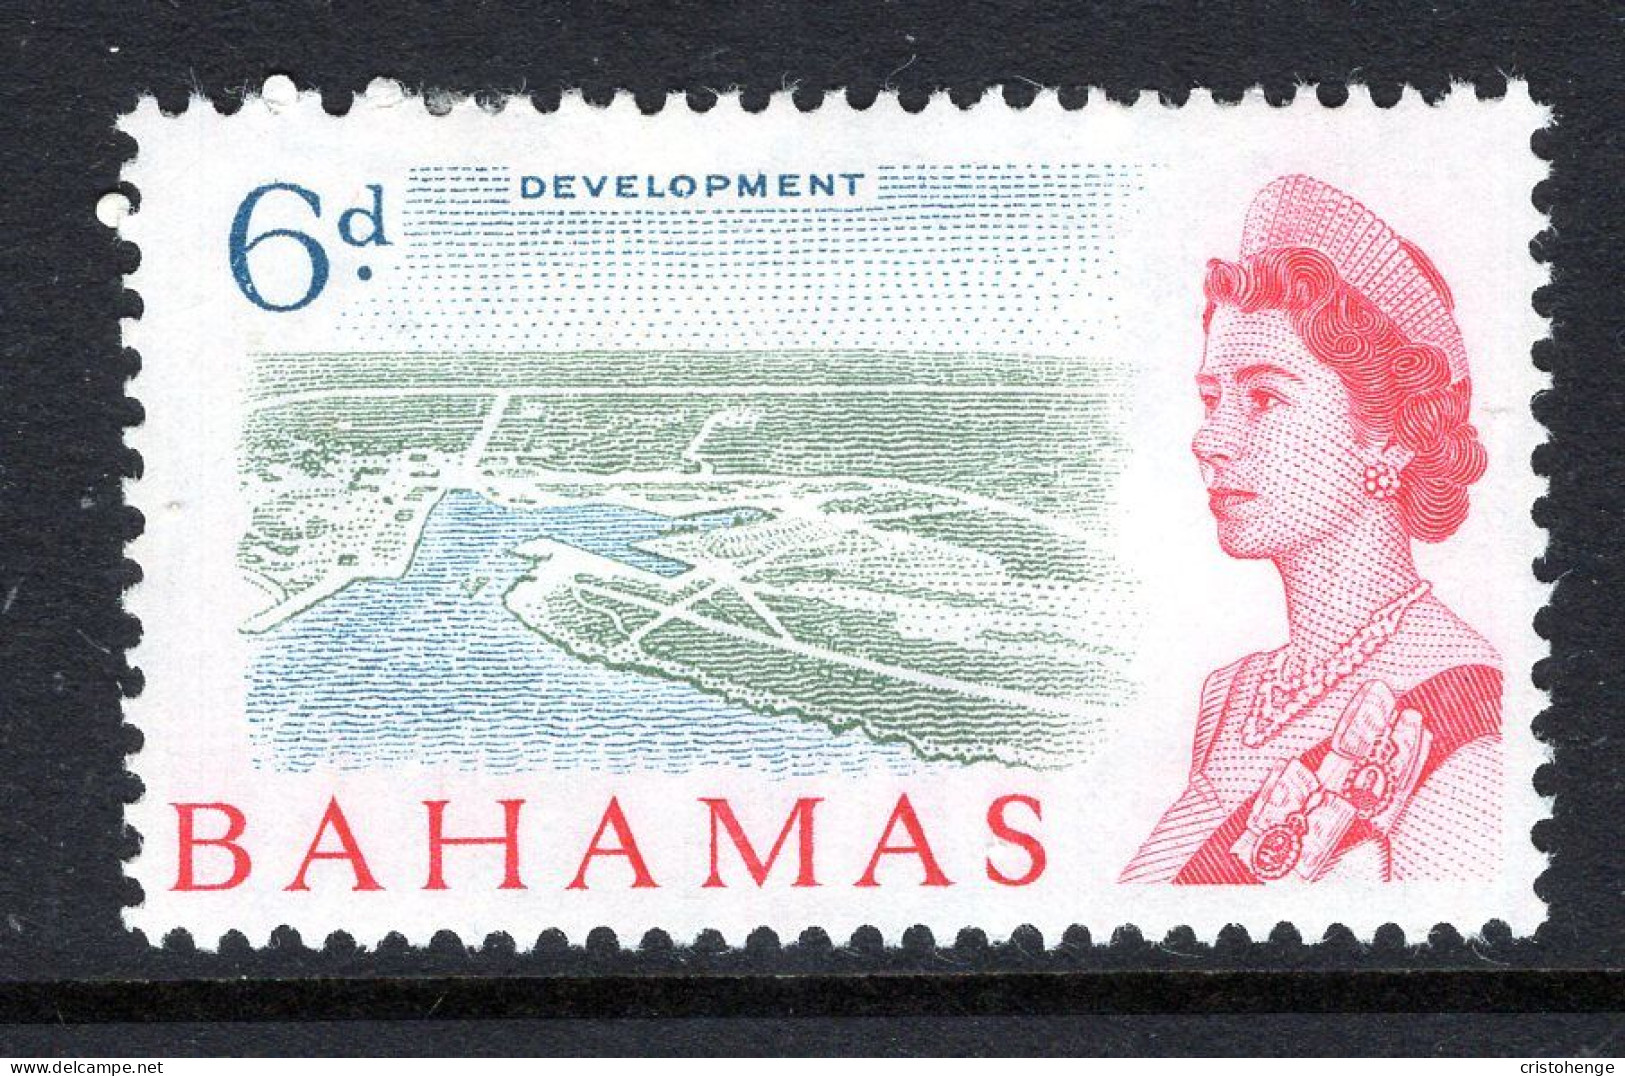 Bahamas 1965 Pictorials - 6d Development HM (SG 253) - 1963-1973 Autonomía Interna